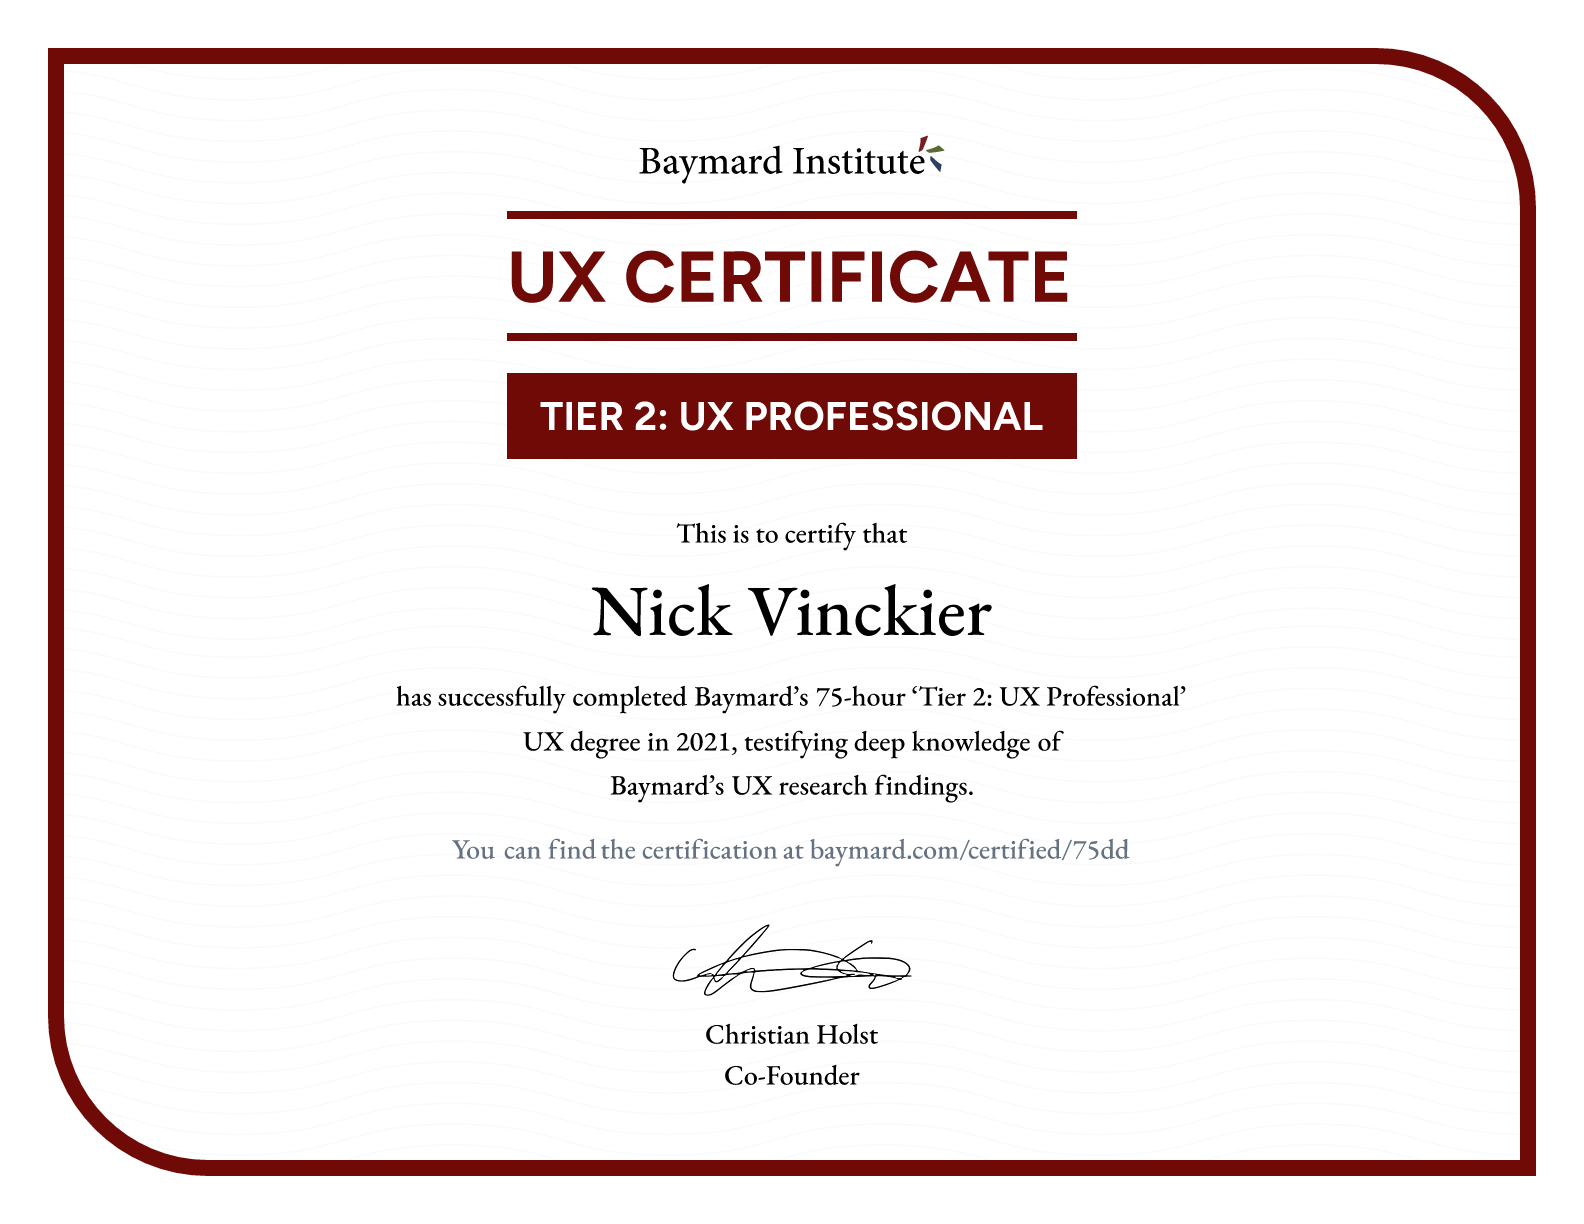 Nick Vinckier ’s certificate